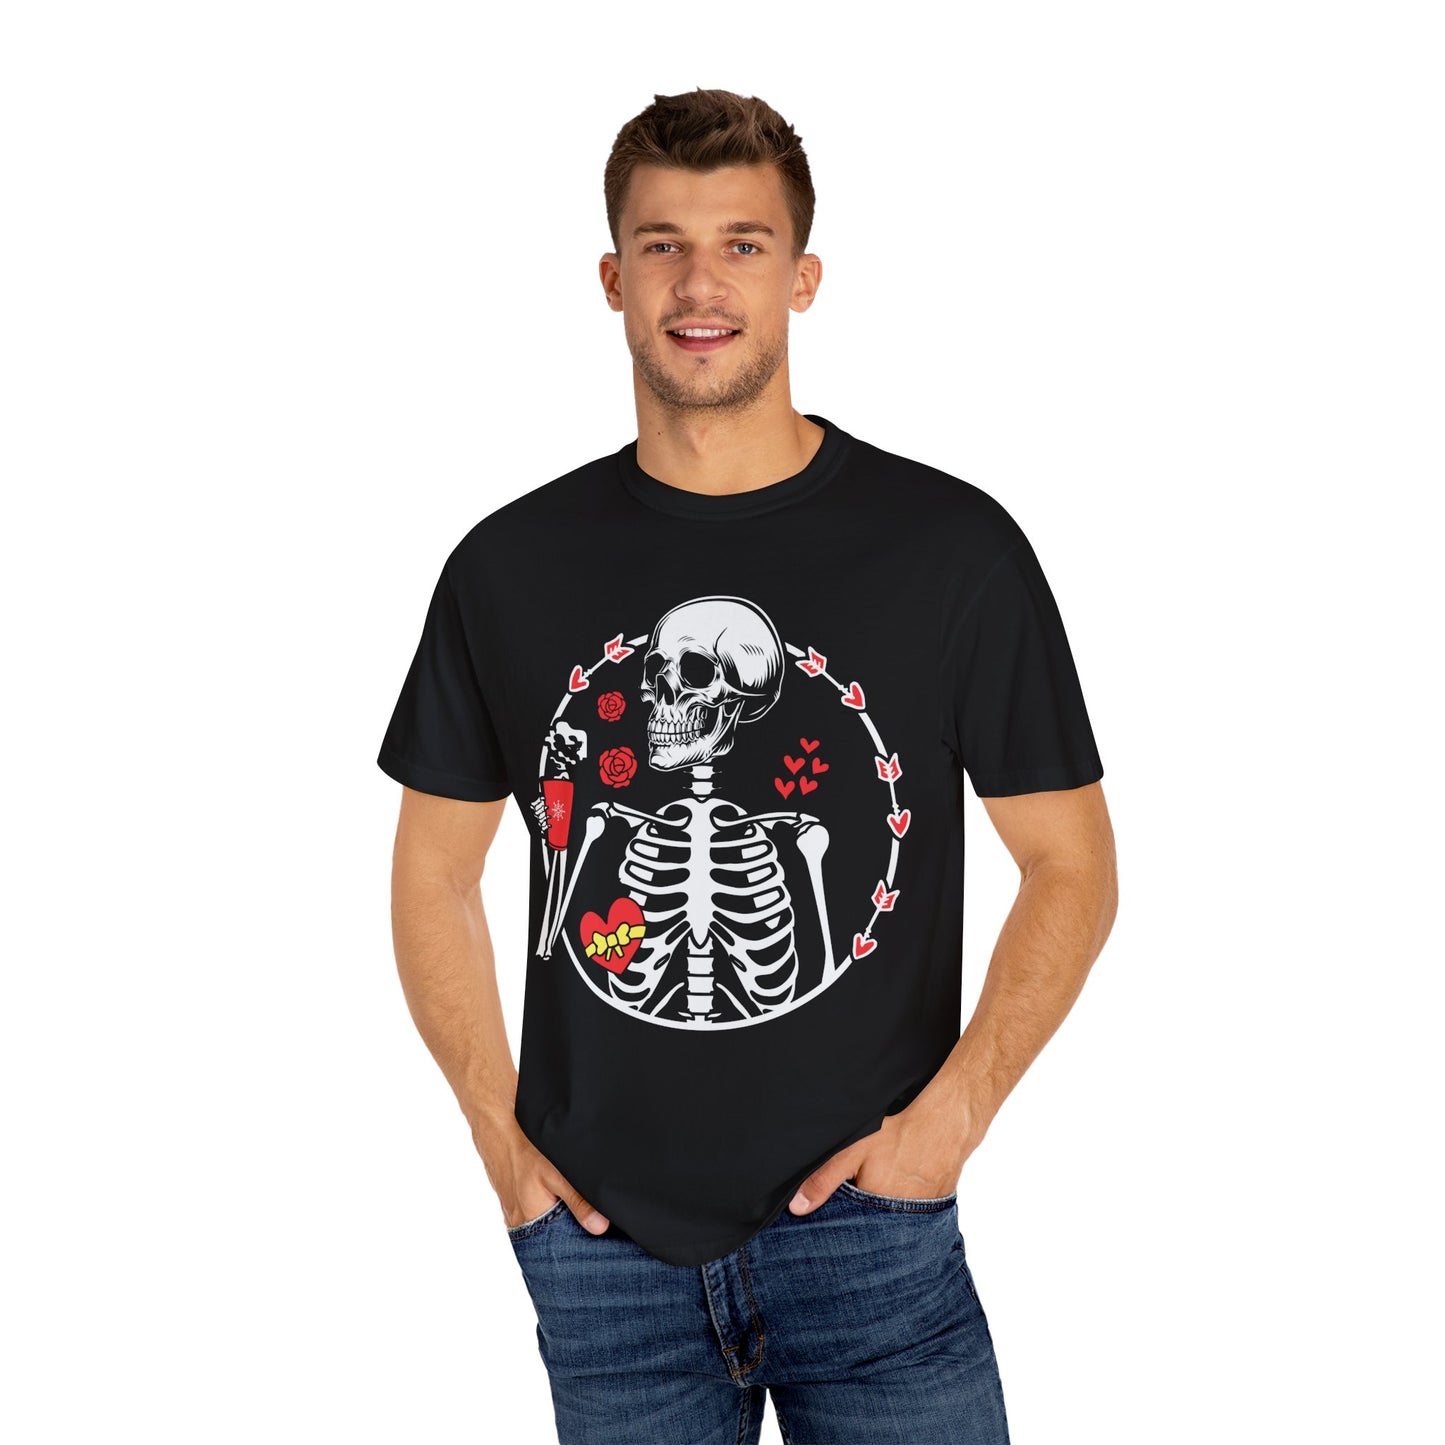 Skeleton Holding Coffee Mug Valentine's Day Shirt, Goth Valentine Skeleton Graphic Tee